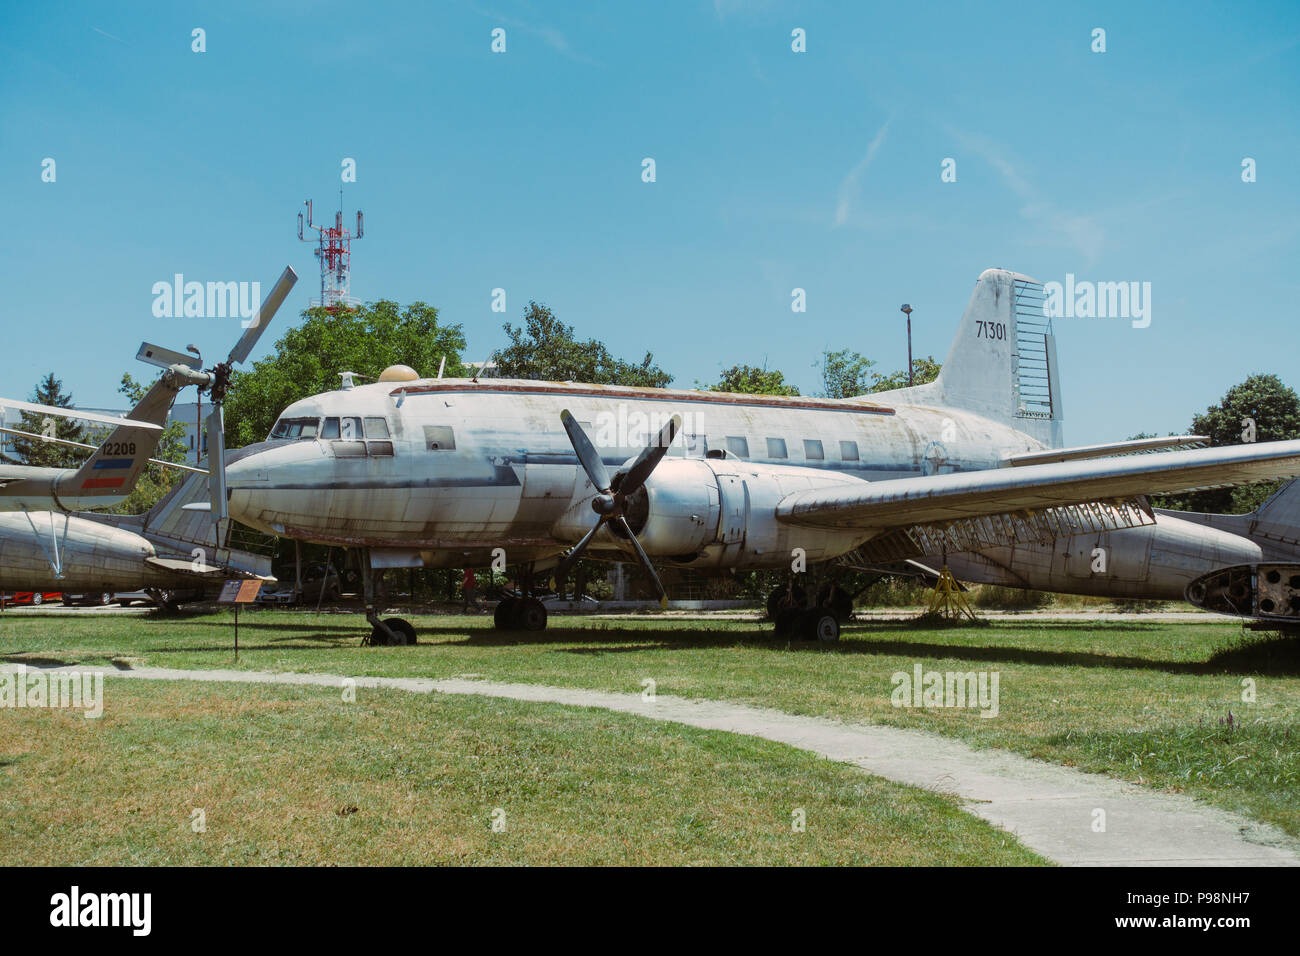 Neglected Yugoslav-era aircraft on display in the summer sun outside the Aeronautical Museum Belgrade, Serbia Stock Photo